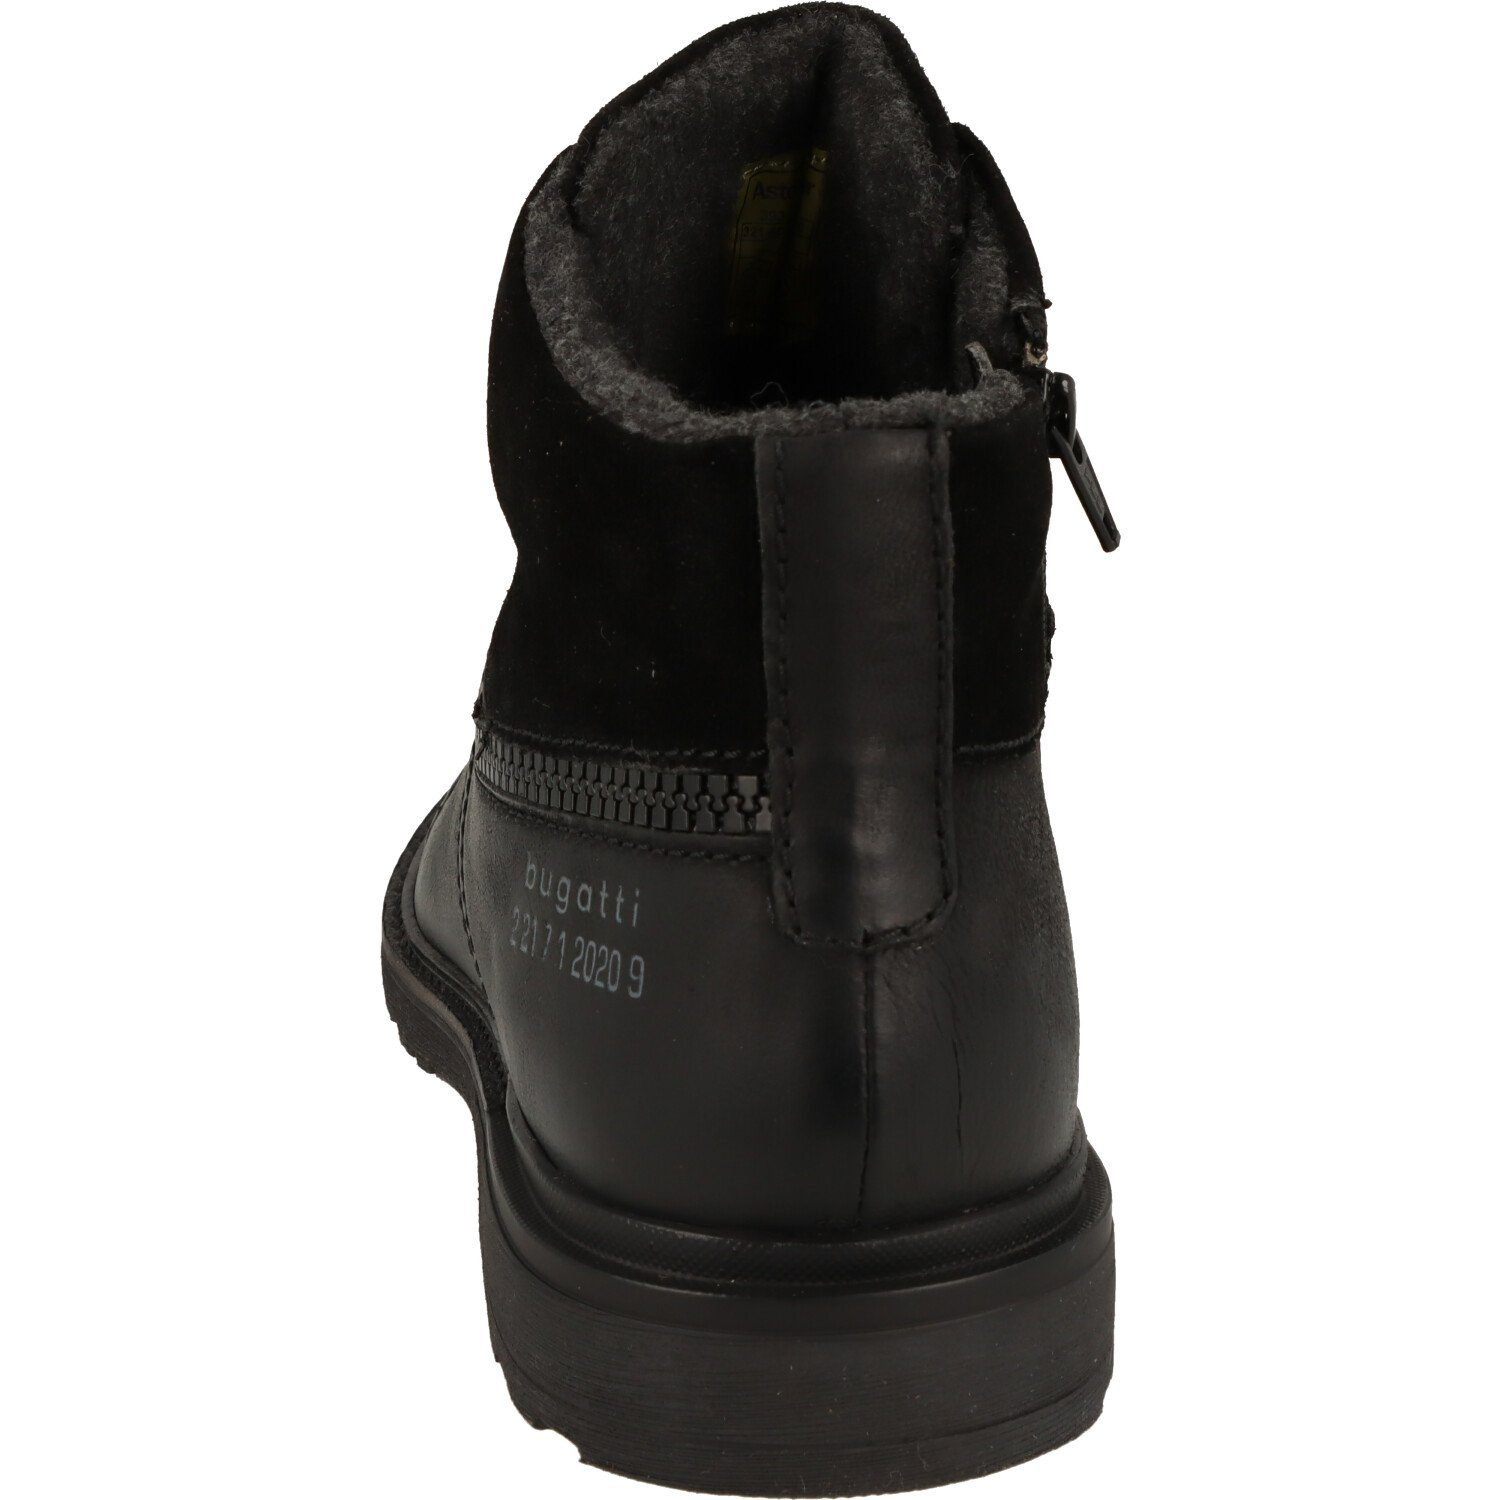 Boots Vittore Stiefel Winterstiefel Leder bugatti Black Schuhe 321-A0U3G-3200 Herren